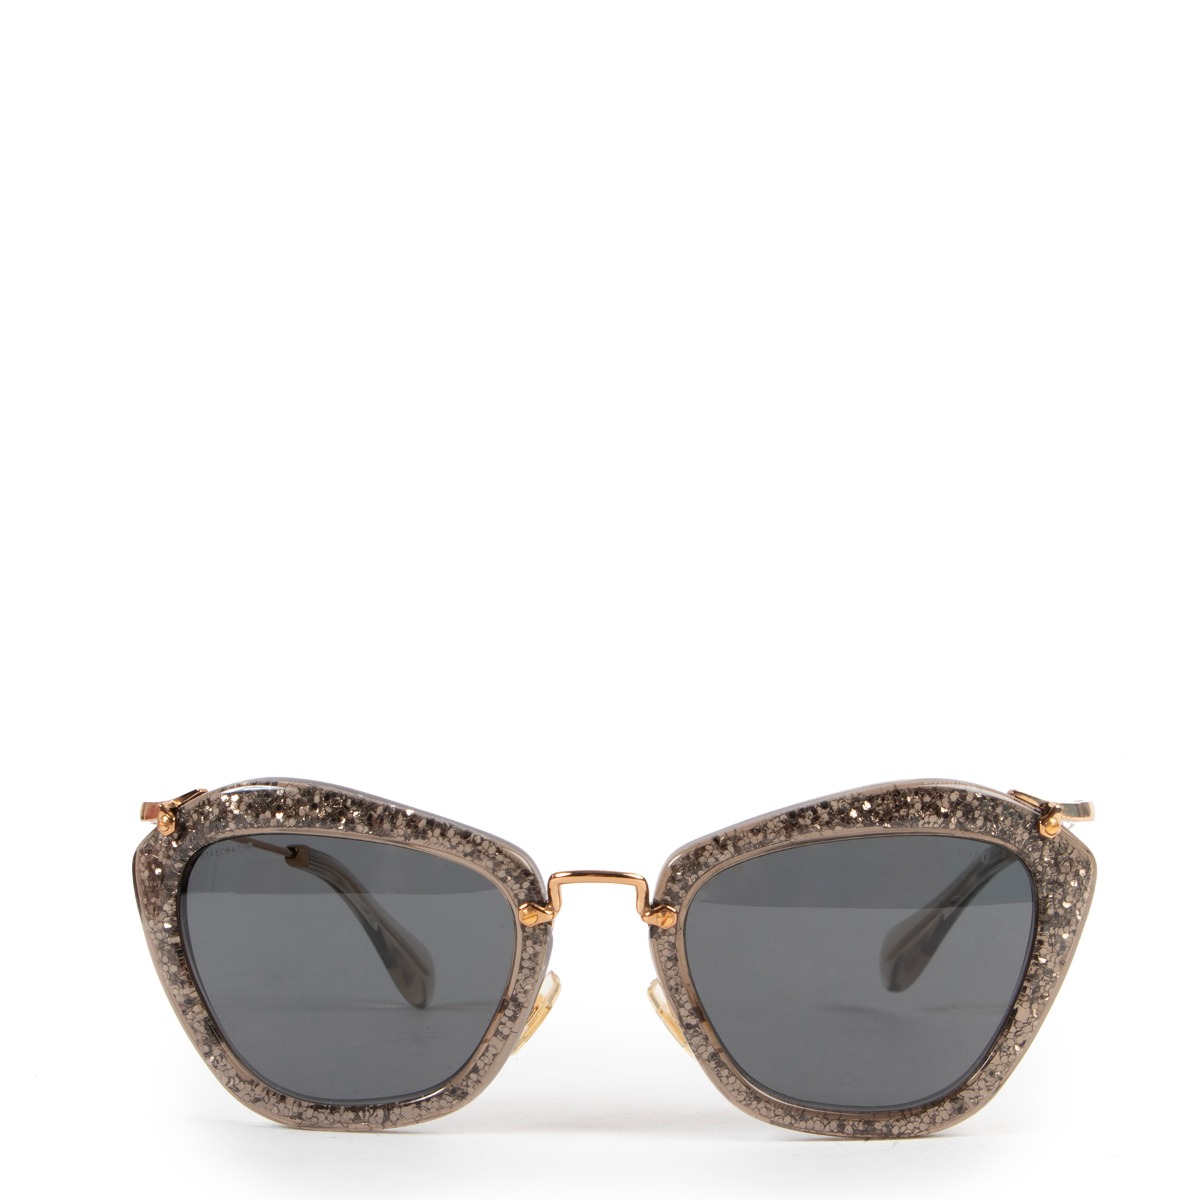 Miu Miu Noir Glitter Sunglasses ○ ○ Buy Sell Authentic Luxury